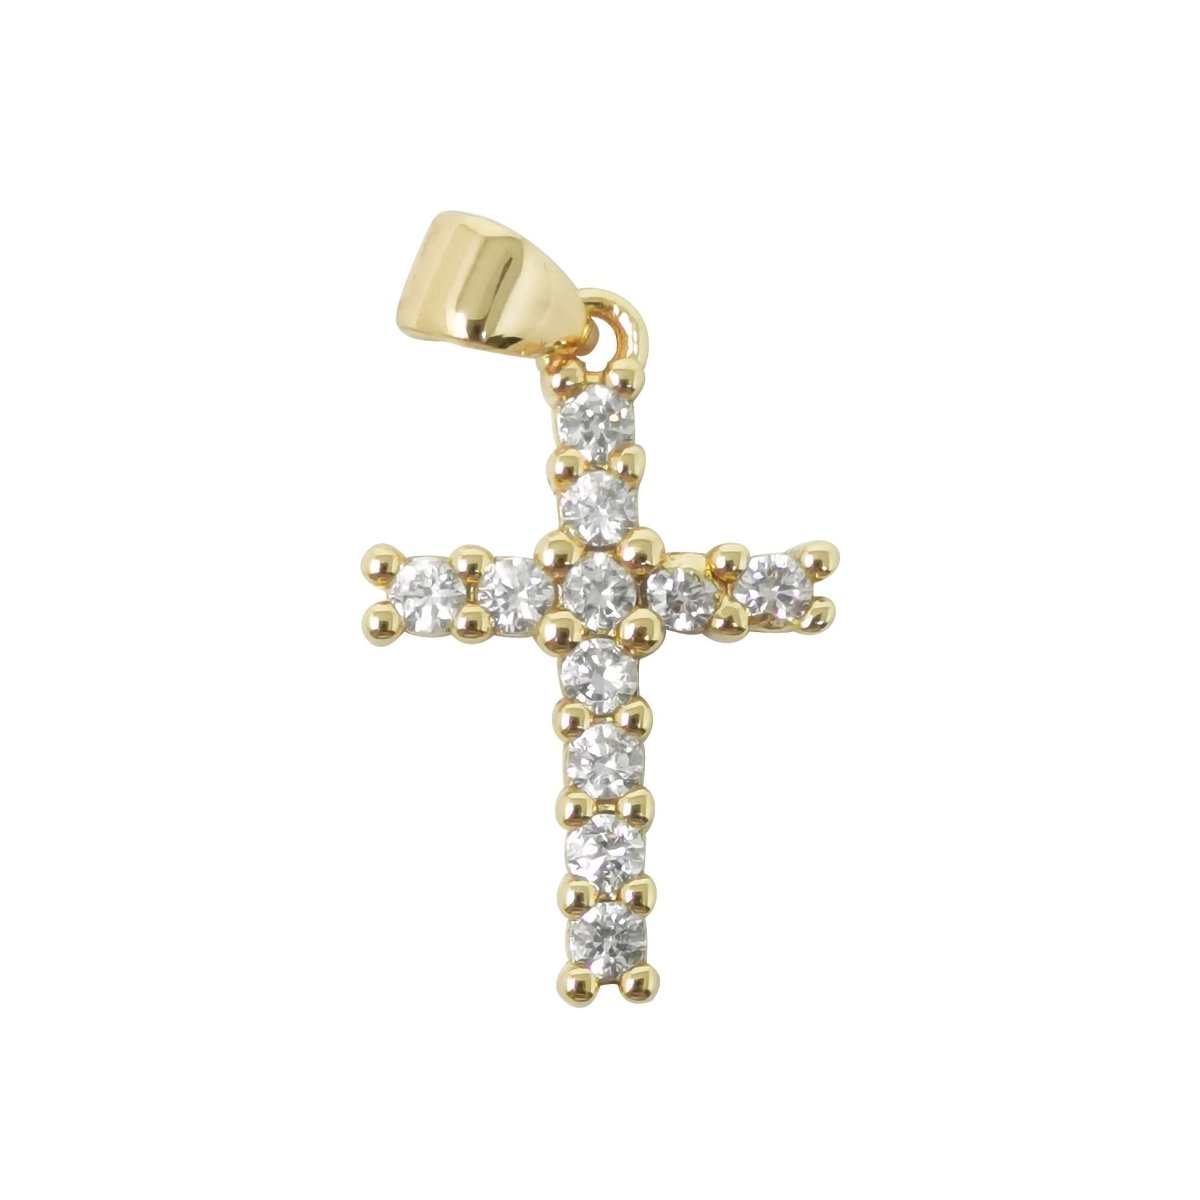 Dainty Gold Filled Cross for Necklace Earring Bracelet Charm 20x13.2mm | J-191 - DLUXCA